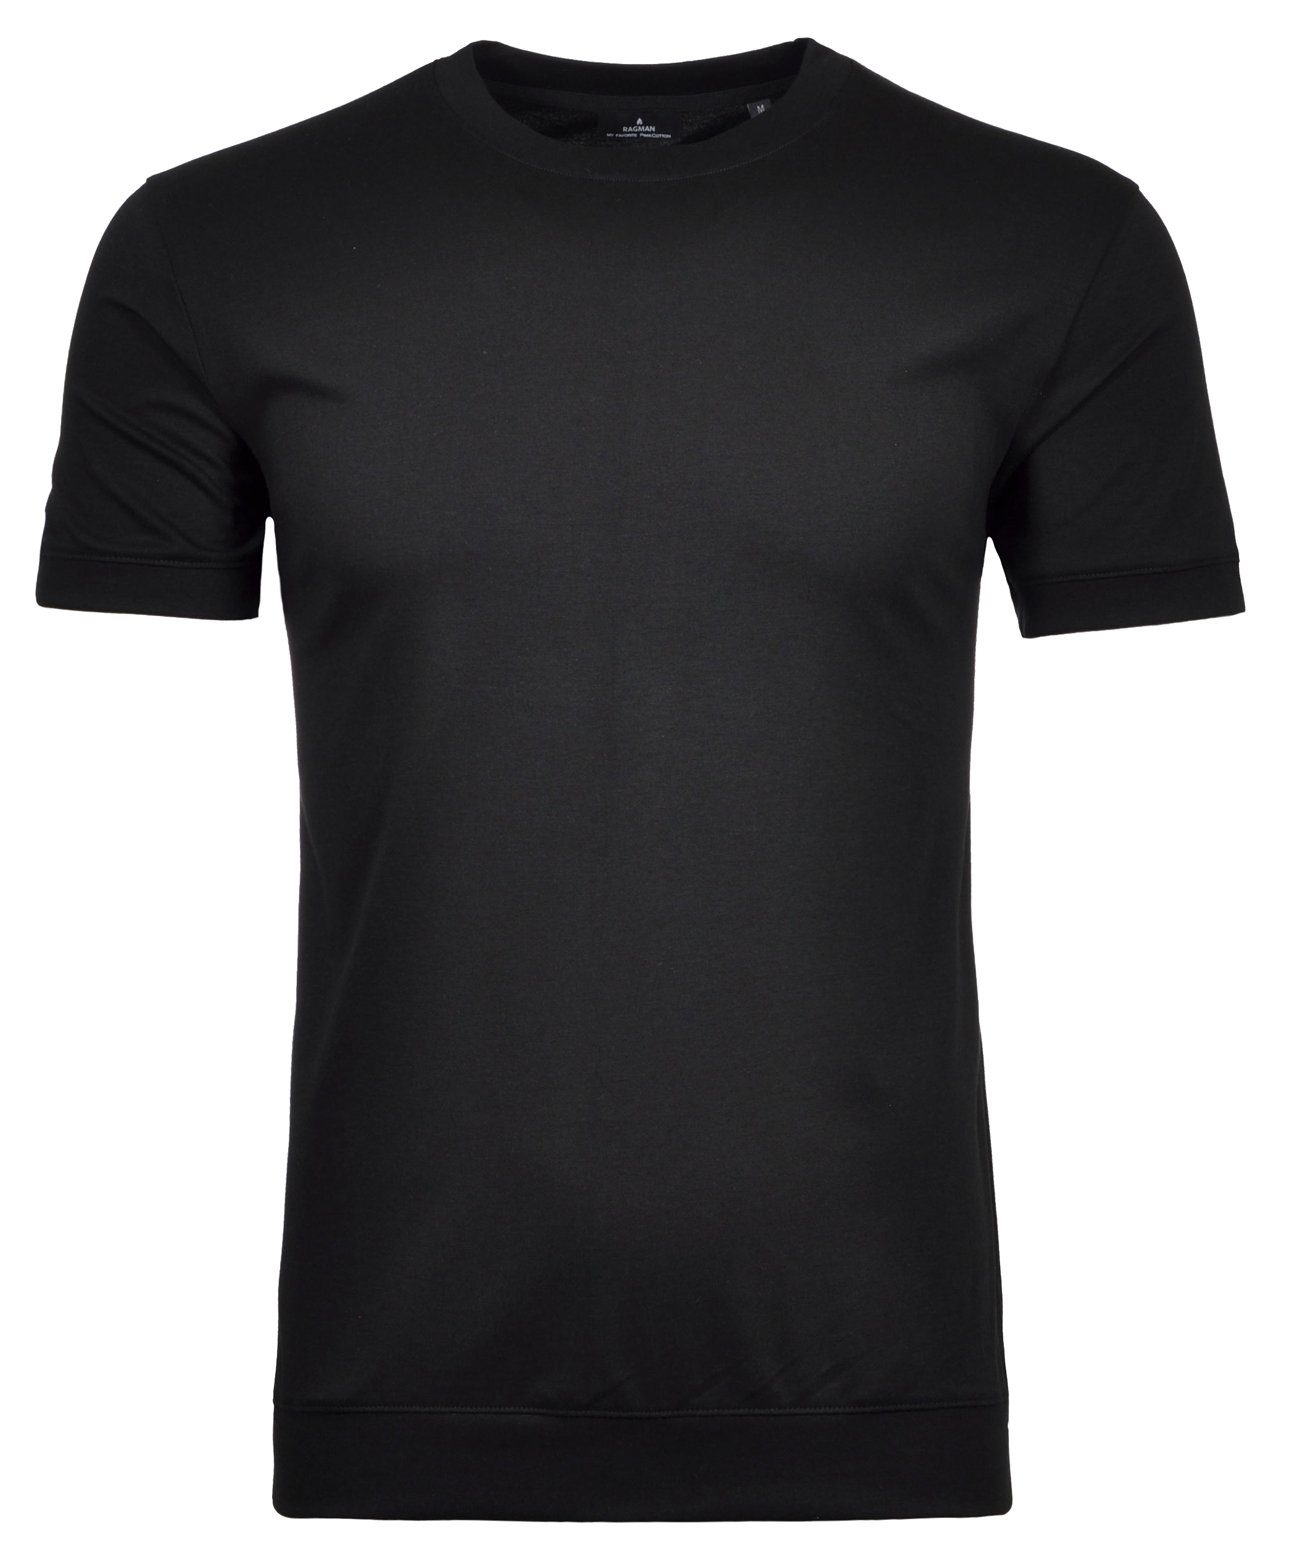 Schwarz RAGMAN T-Shirt